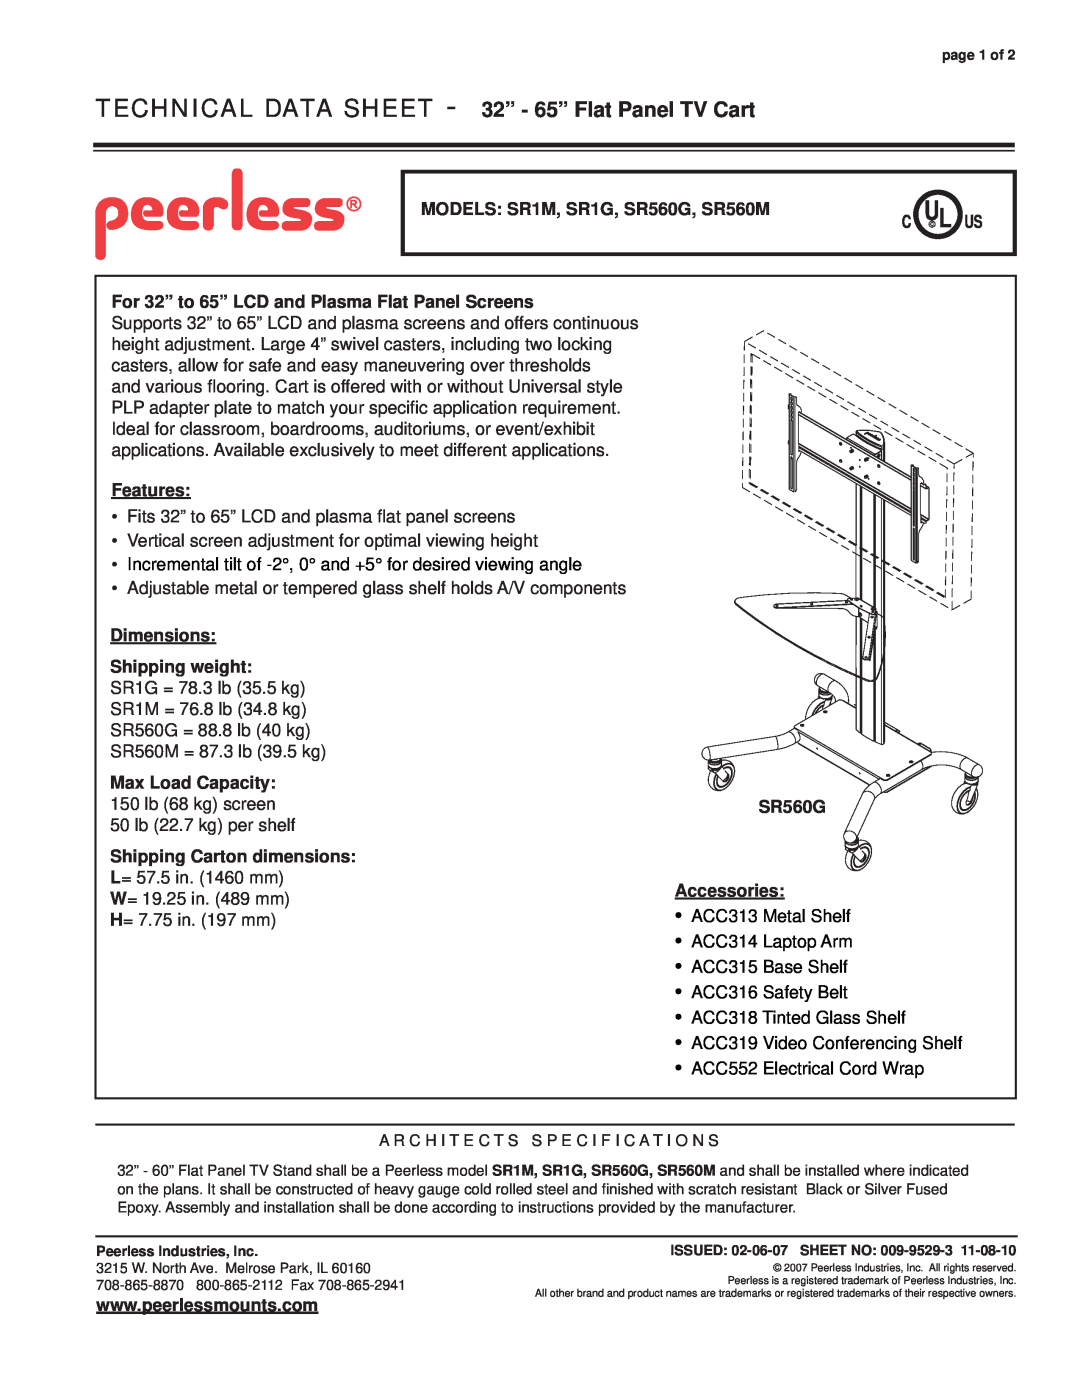 Peerless Industries SR1G, SR560G specifications ACC313 Metal Shelf ACC314 Laptop Arm, ACC315 Base Shelf ACC316 Safety Belt 